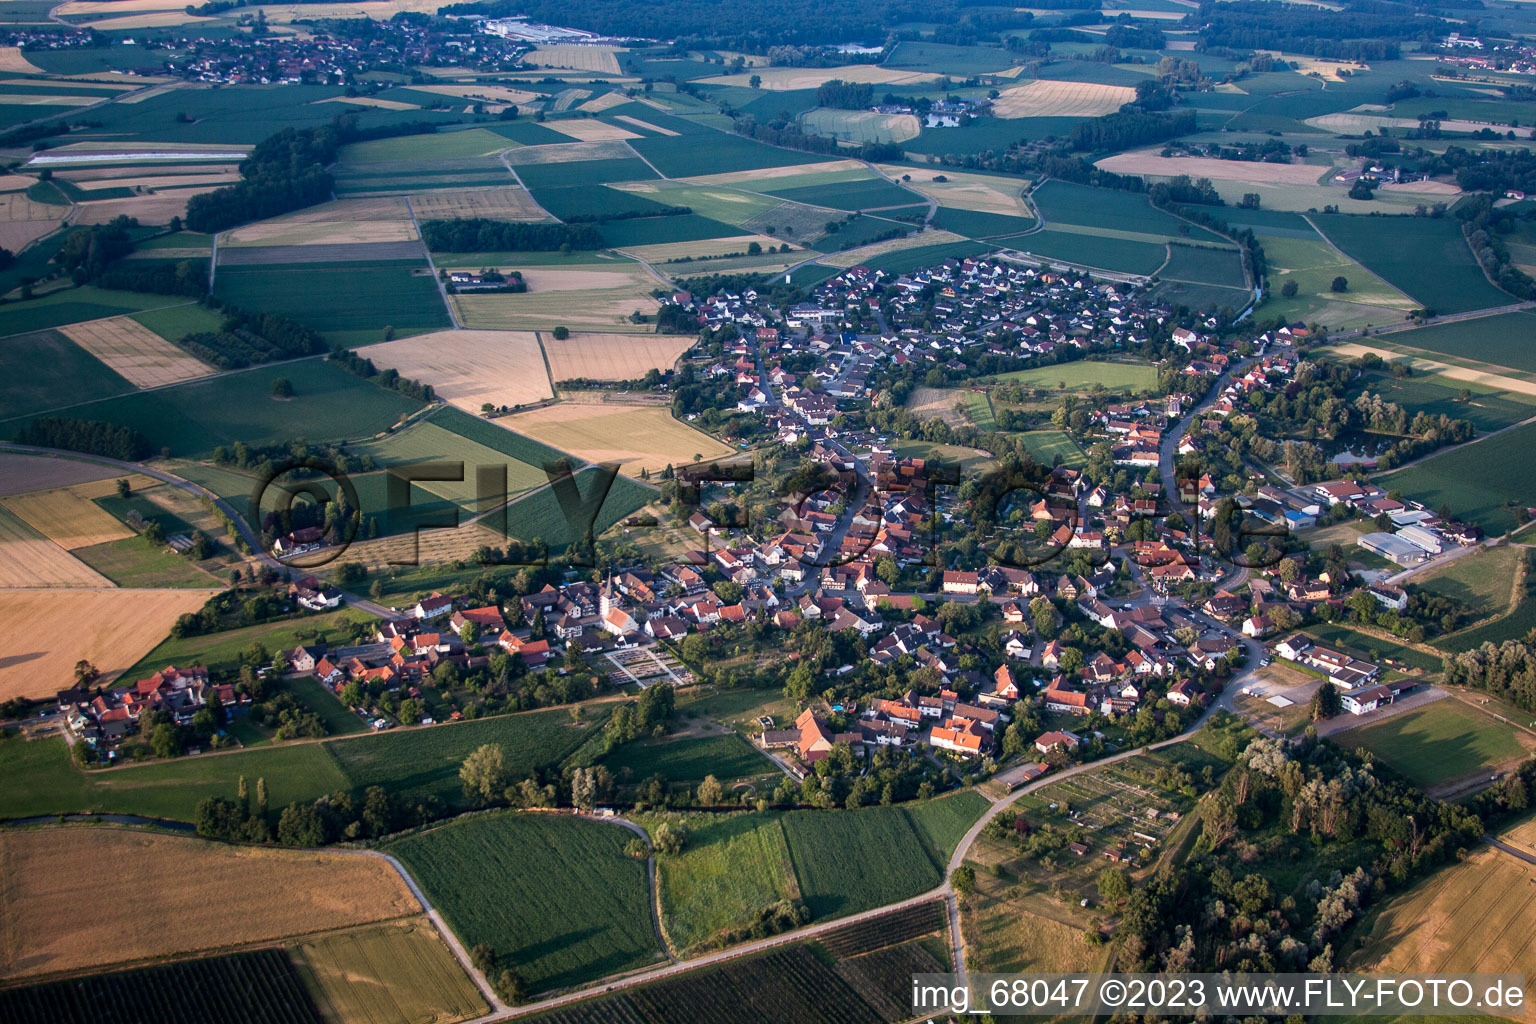 District Diersheim in Rheinau in the state Baden-Wuerttemberg, Germany viewn from the air